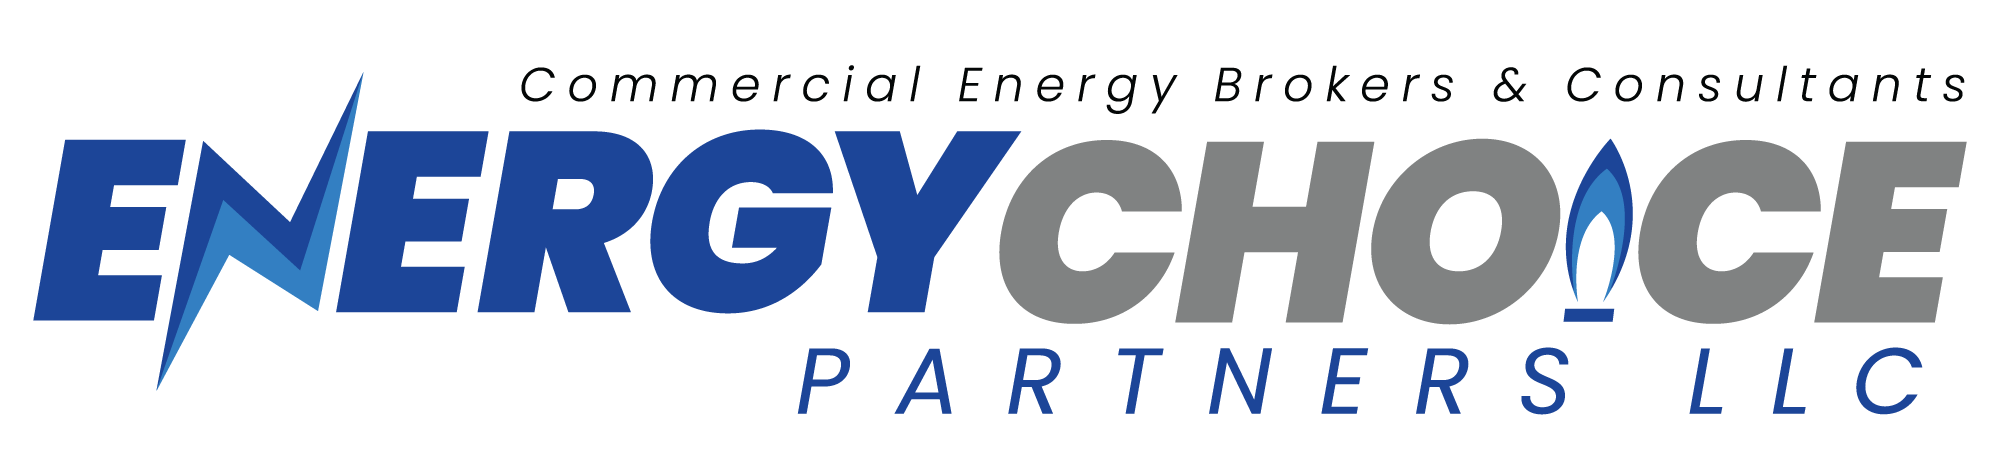 Energy-Choice-Partners-LLC-logo (horiz)-1